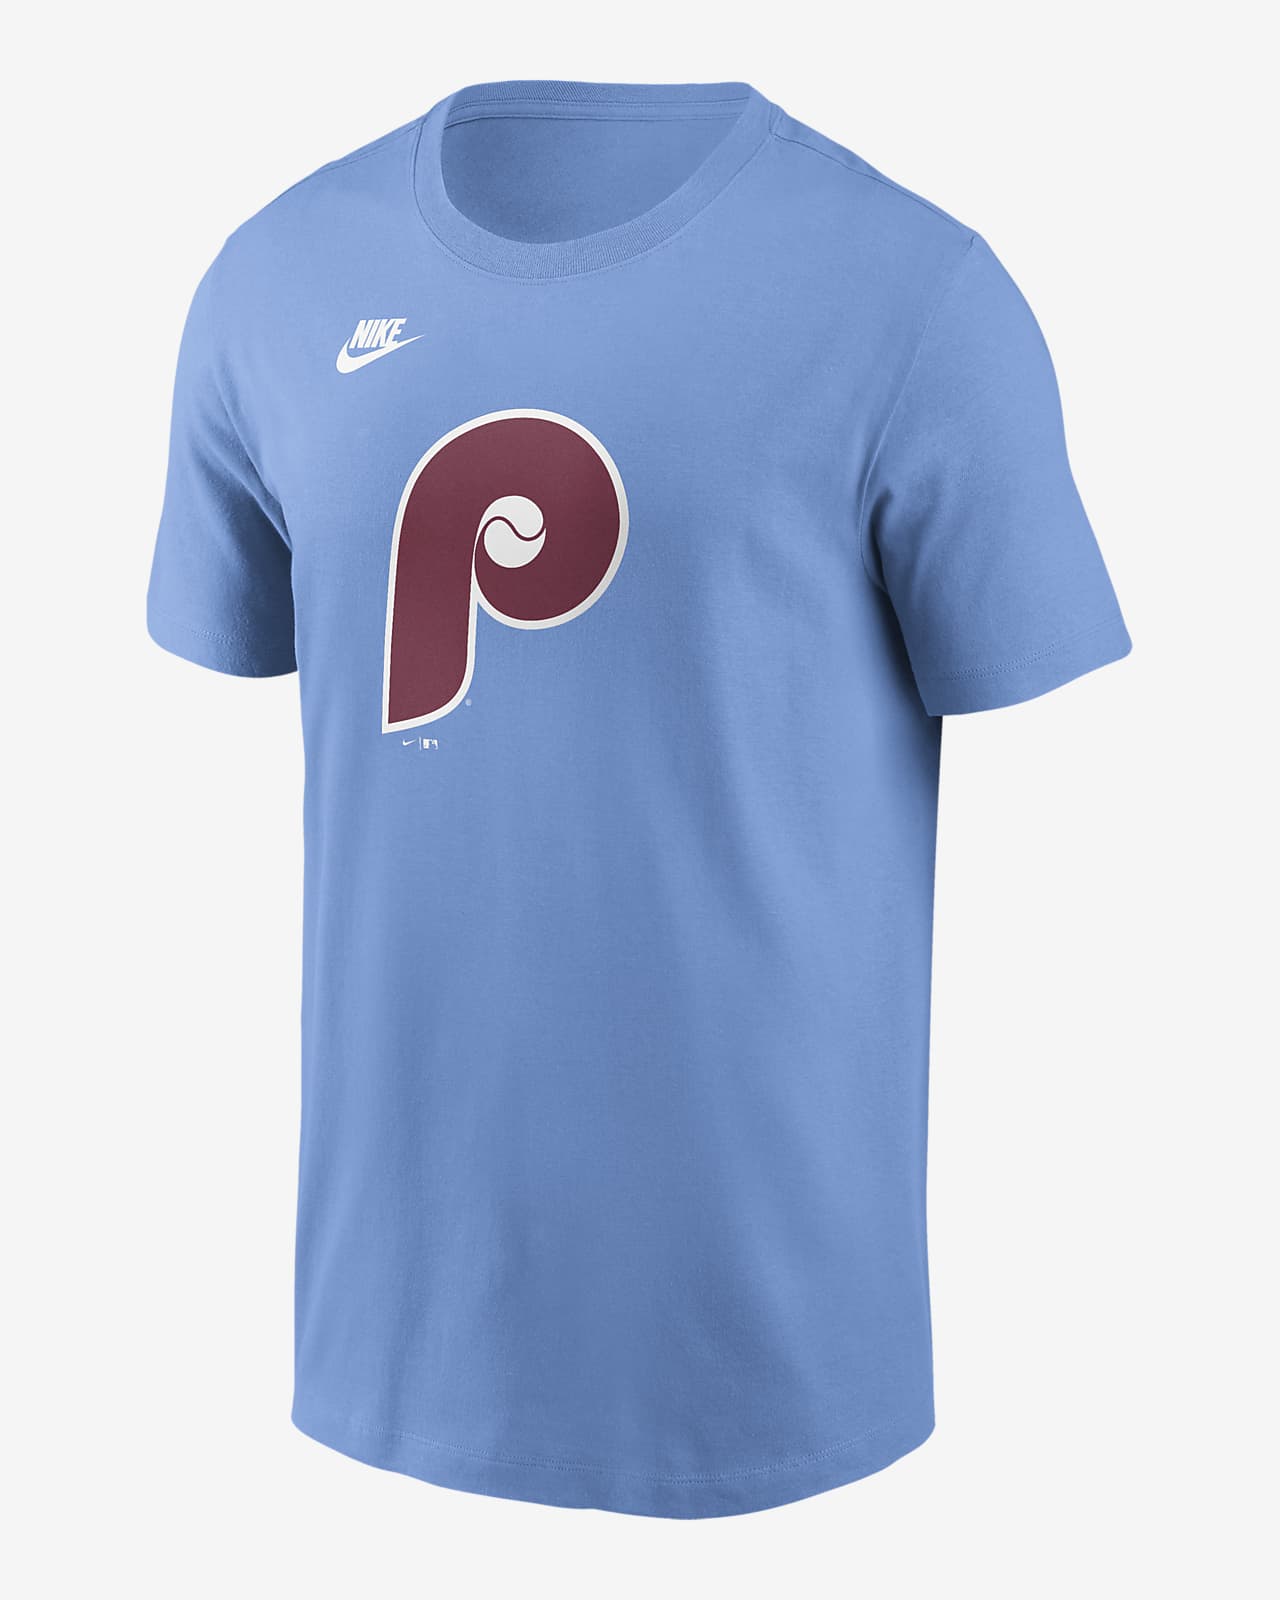 Playera Nike de la MLB para hombre Philadelphia Phillies Cooperstown Logo